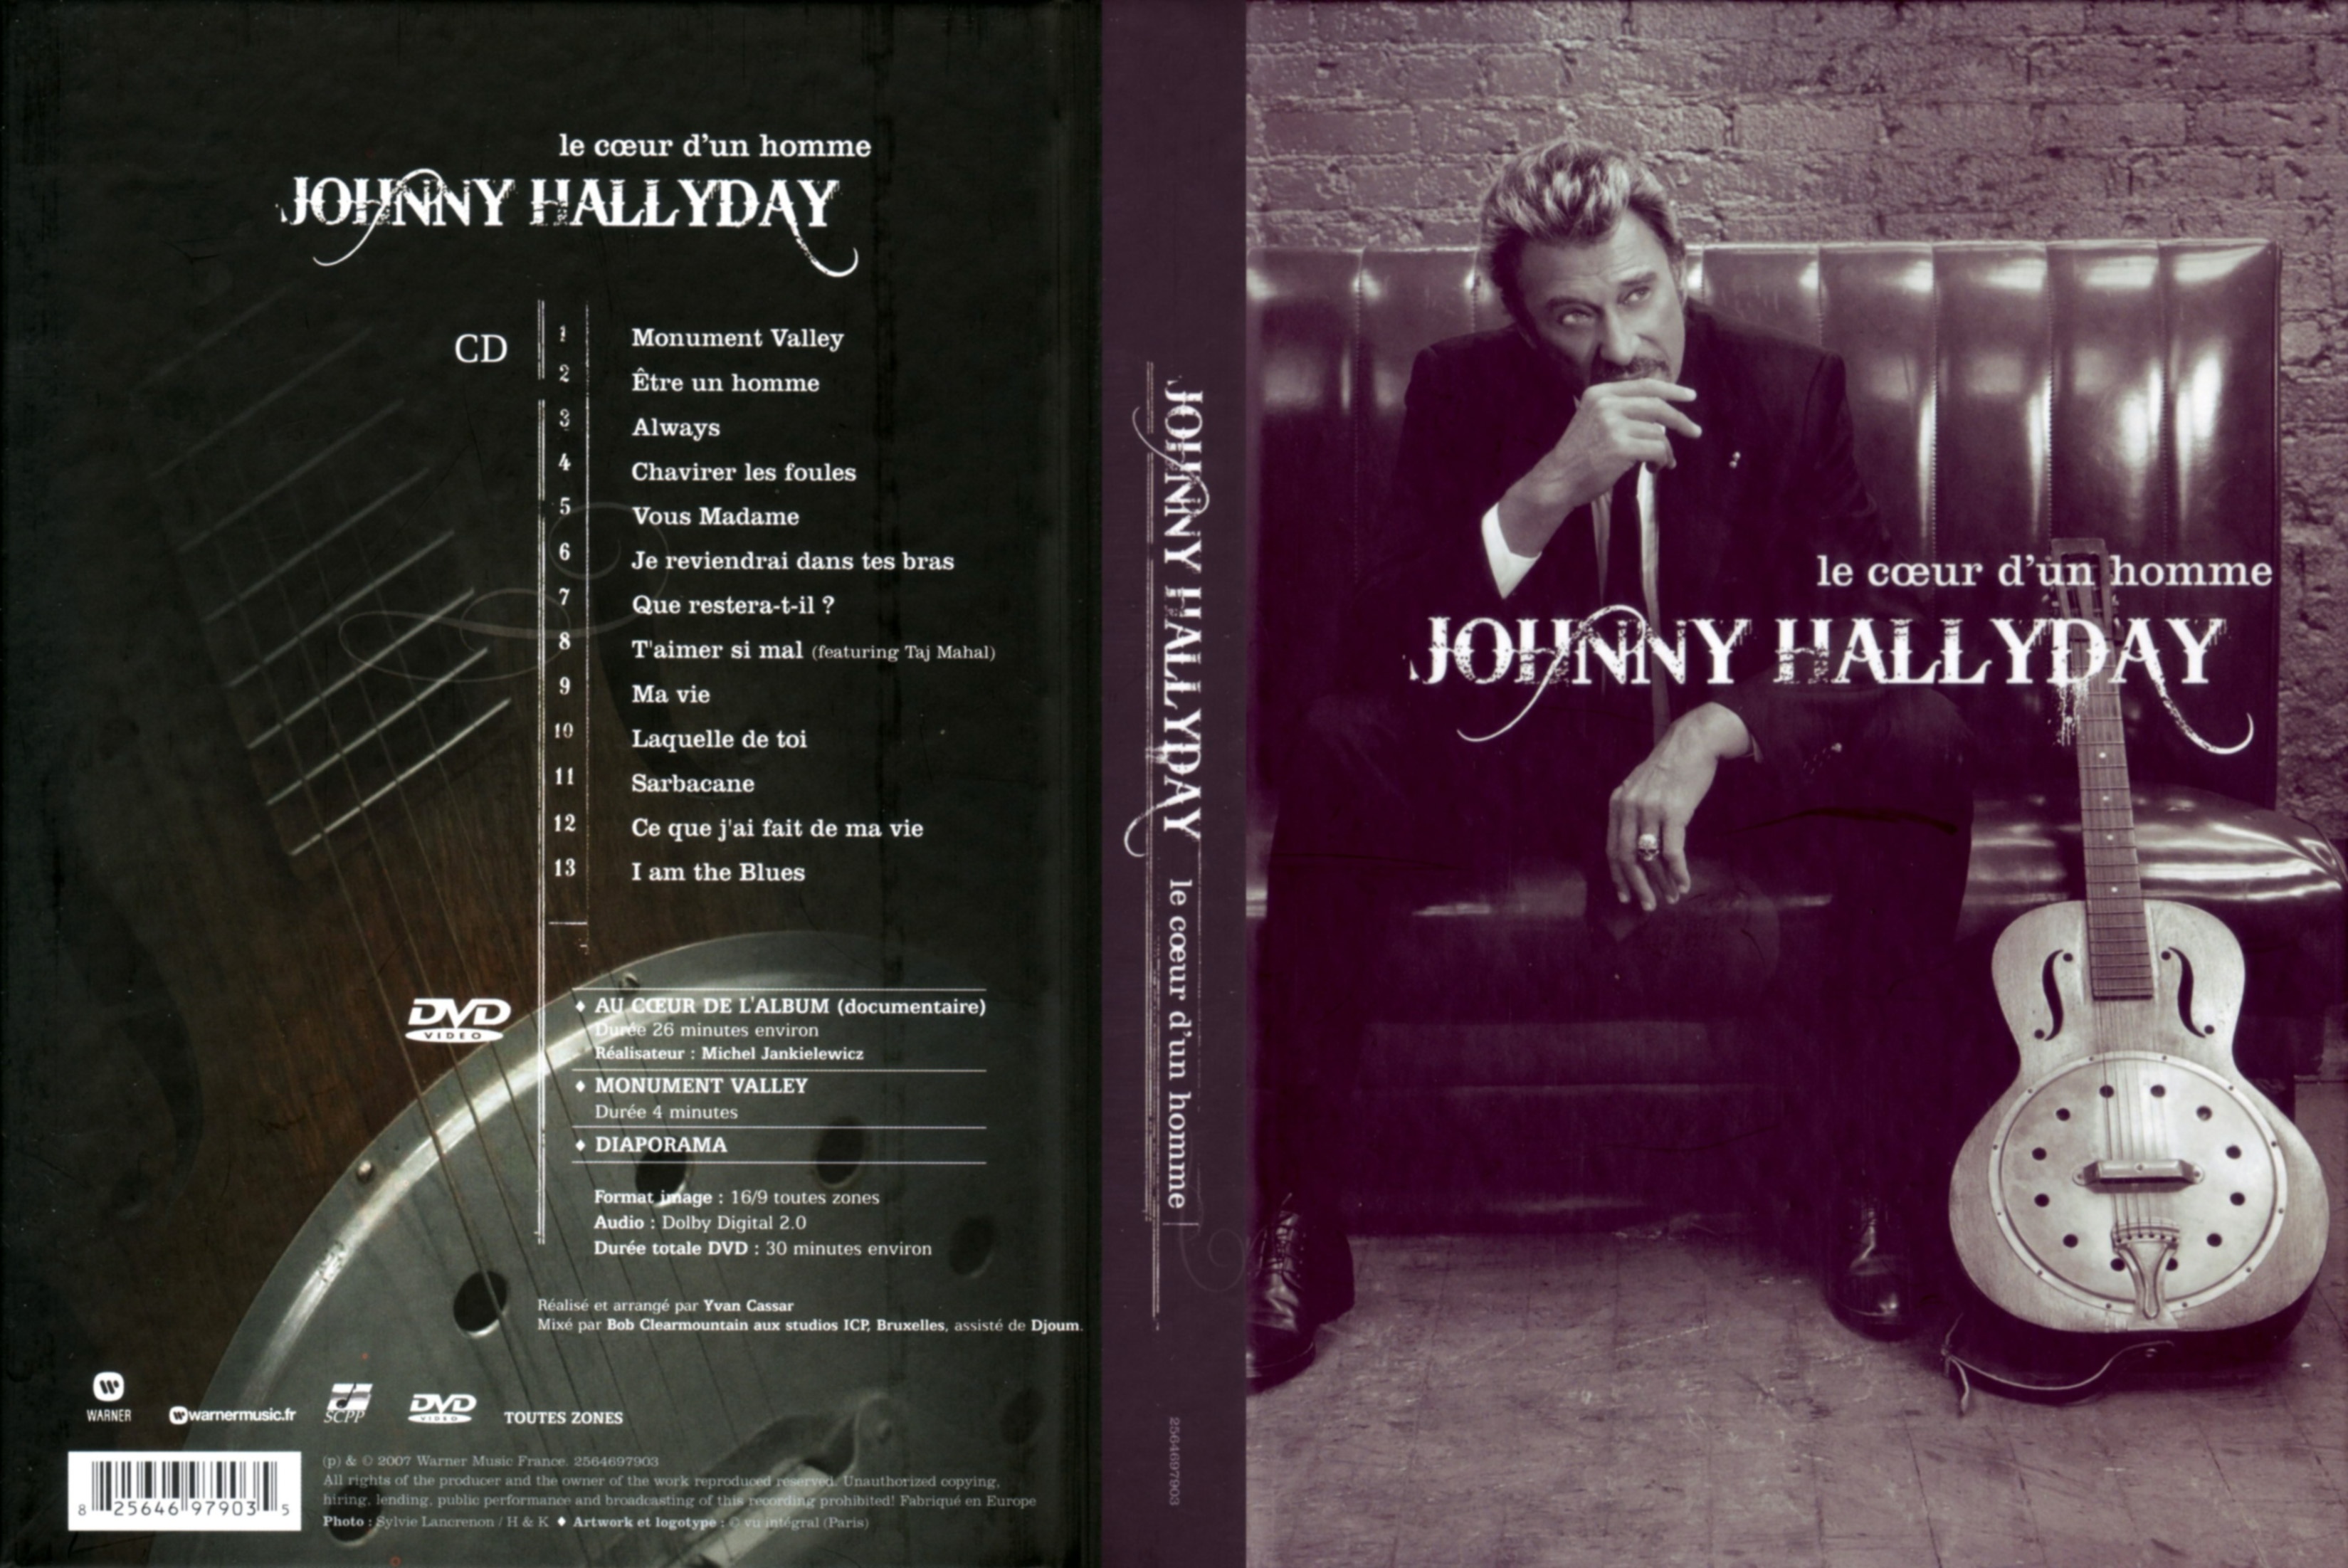 Jaquette DVD Johnny Hallyday Le coeur d